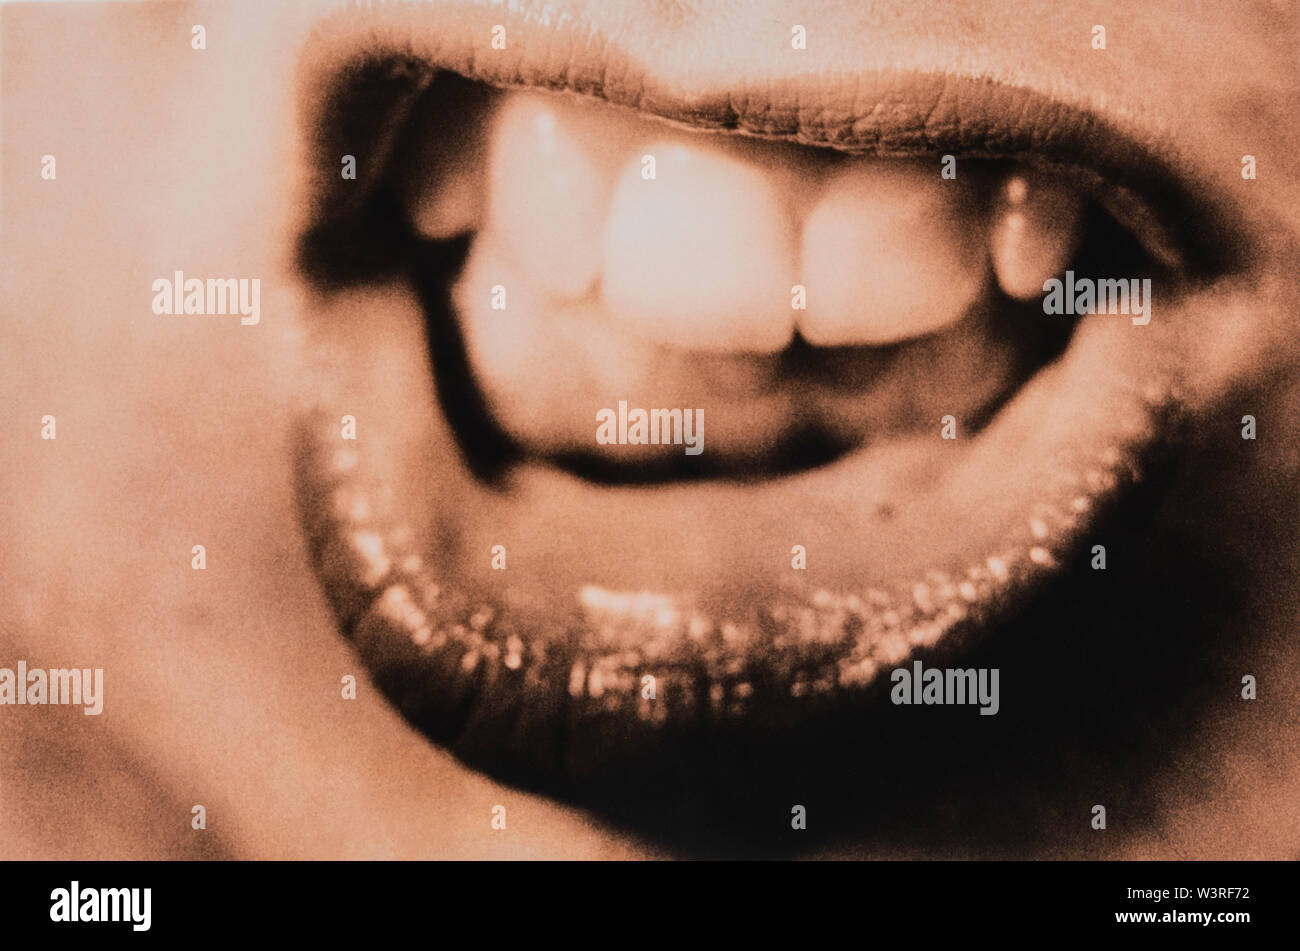 Woman grimacing showing teeth Stock Photo